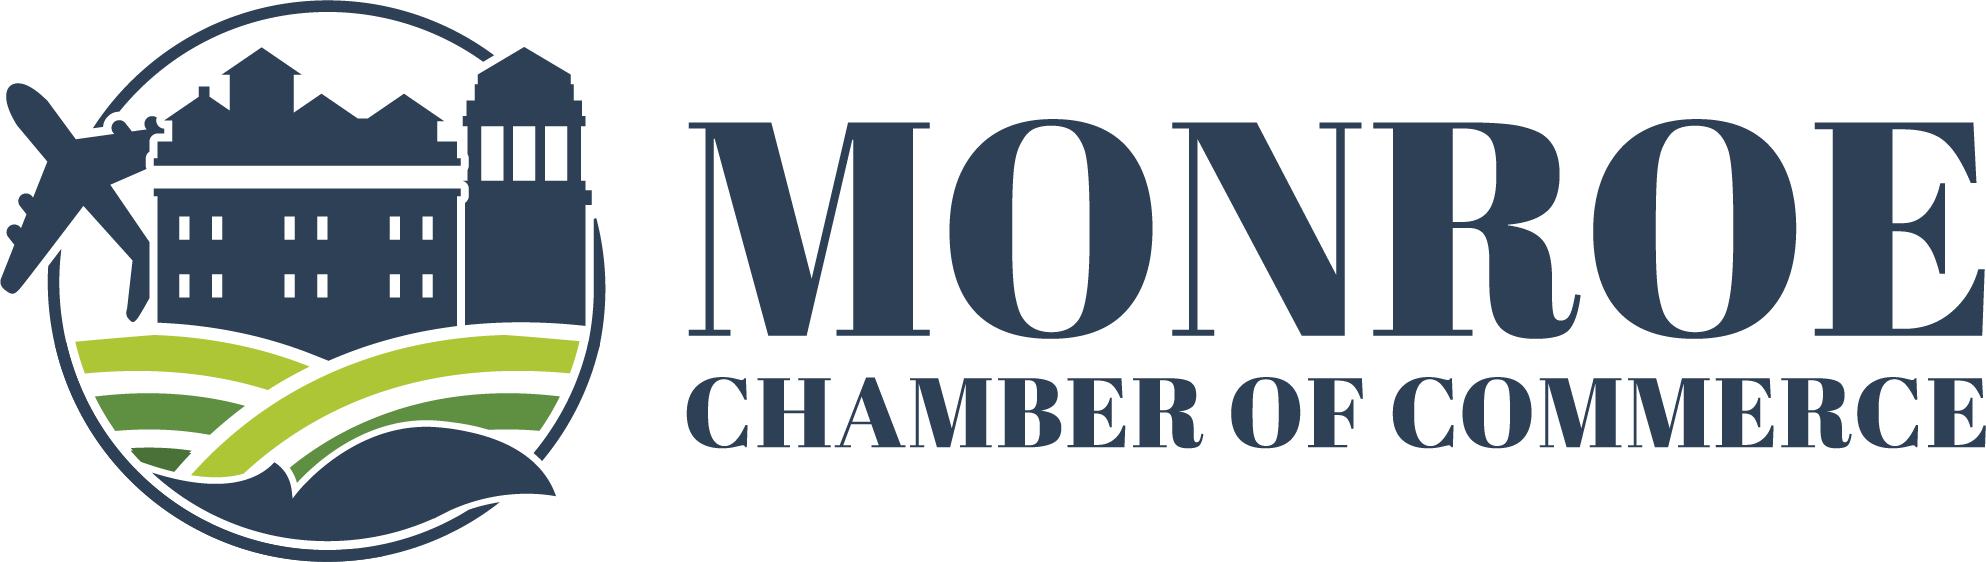 MonroeChamber logo - HORZ (002)